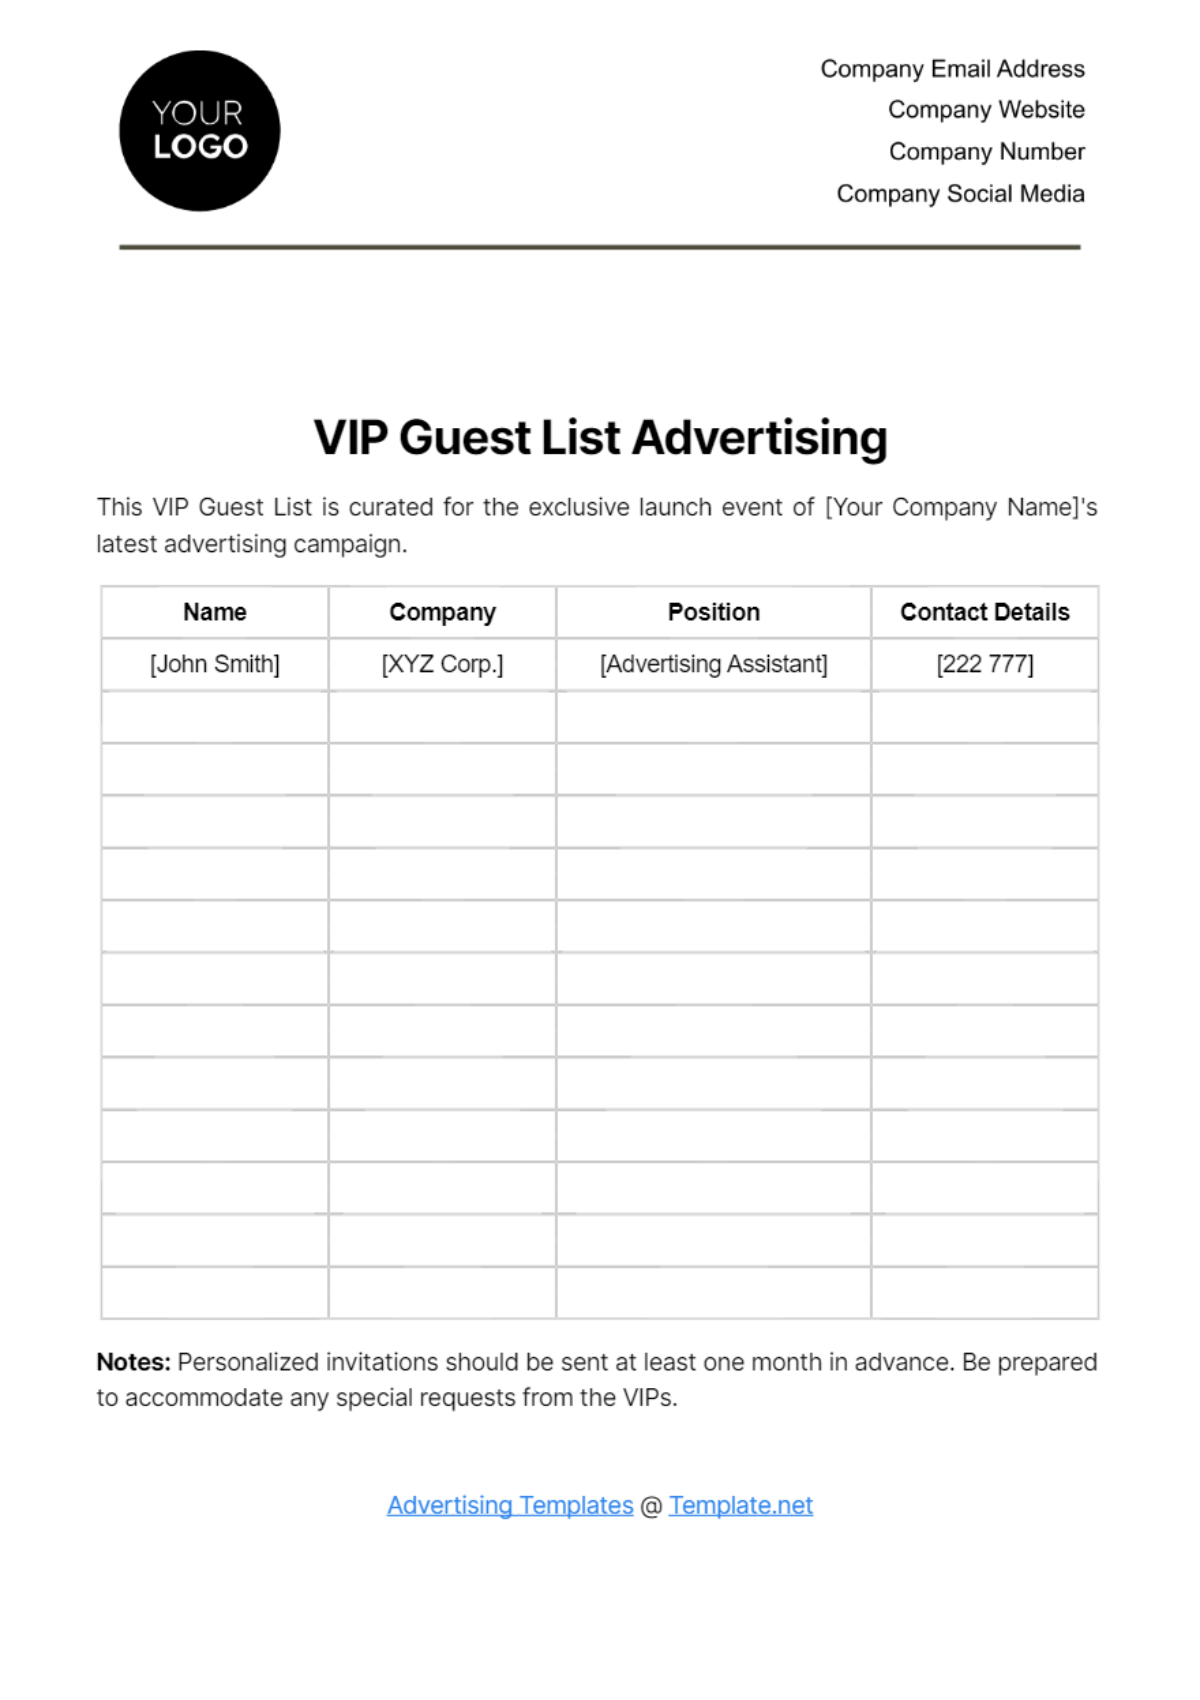 VIP Guest List Advertising Template